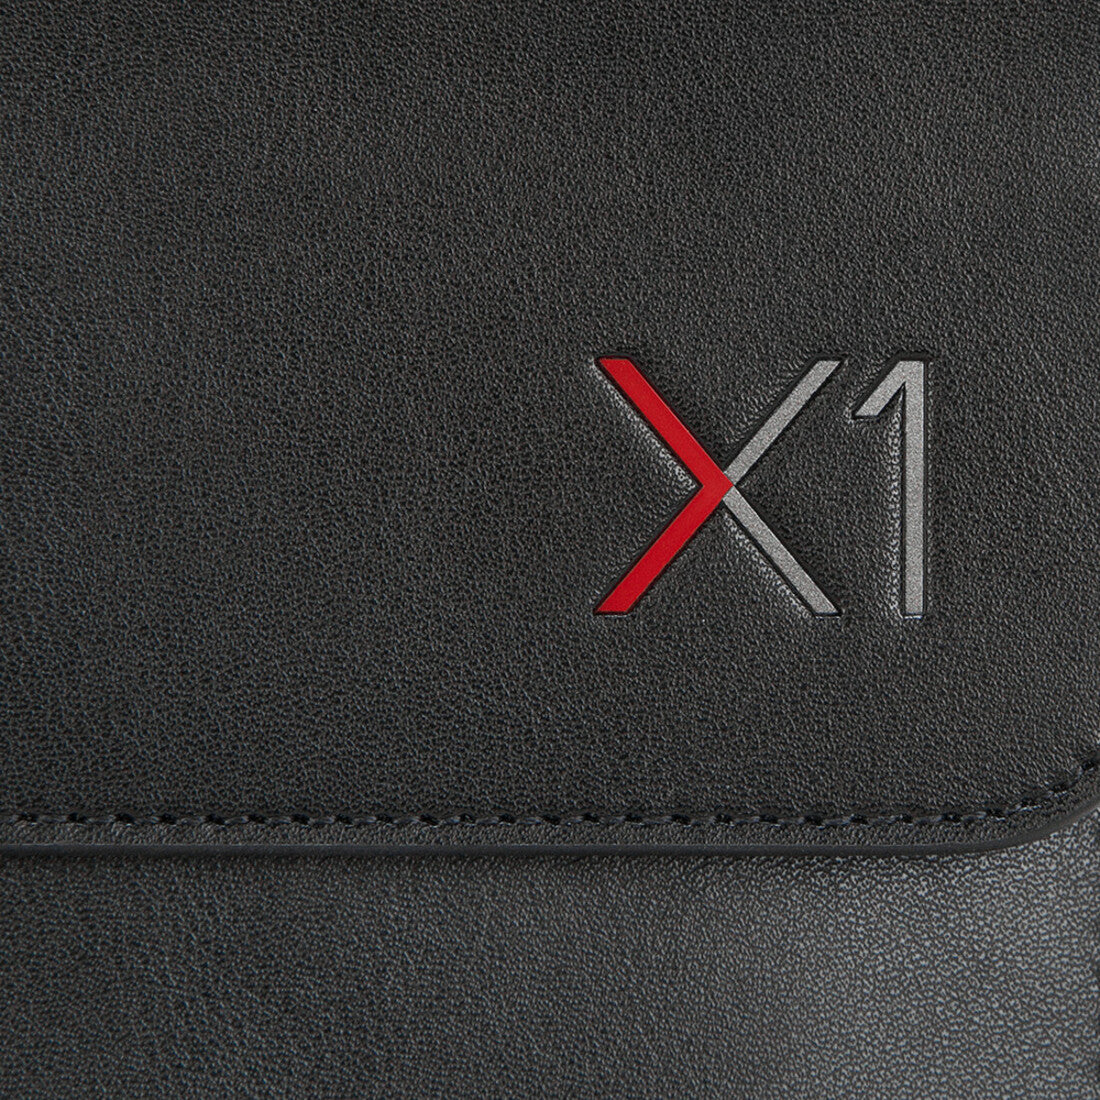 Lenovo Carrying Case (Sleeve) for 14" Lenovo Notebook - Black